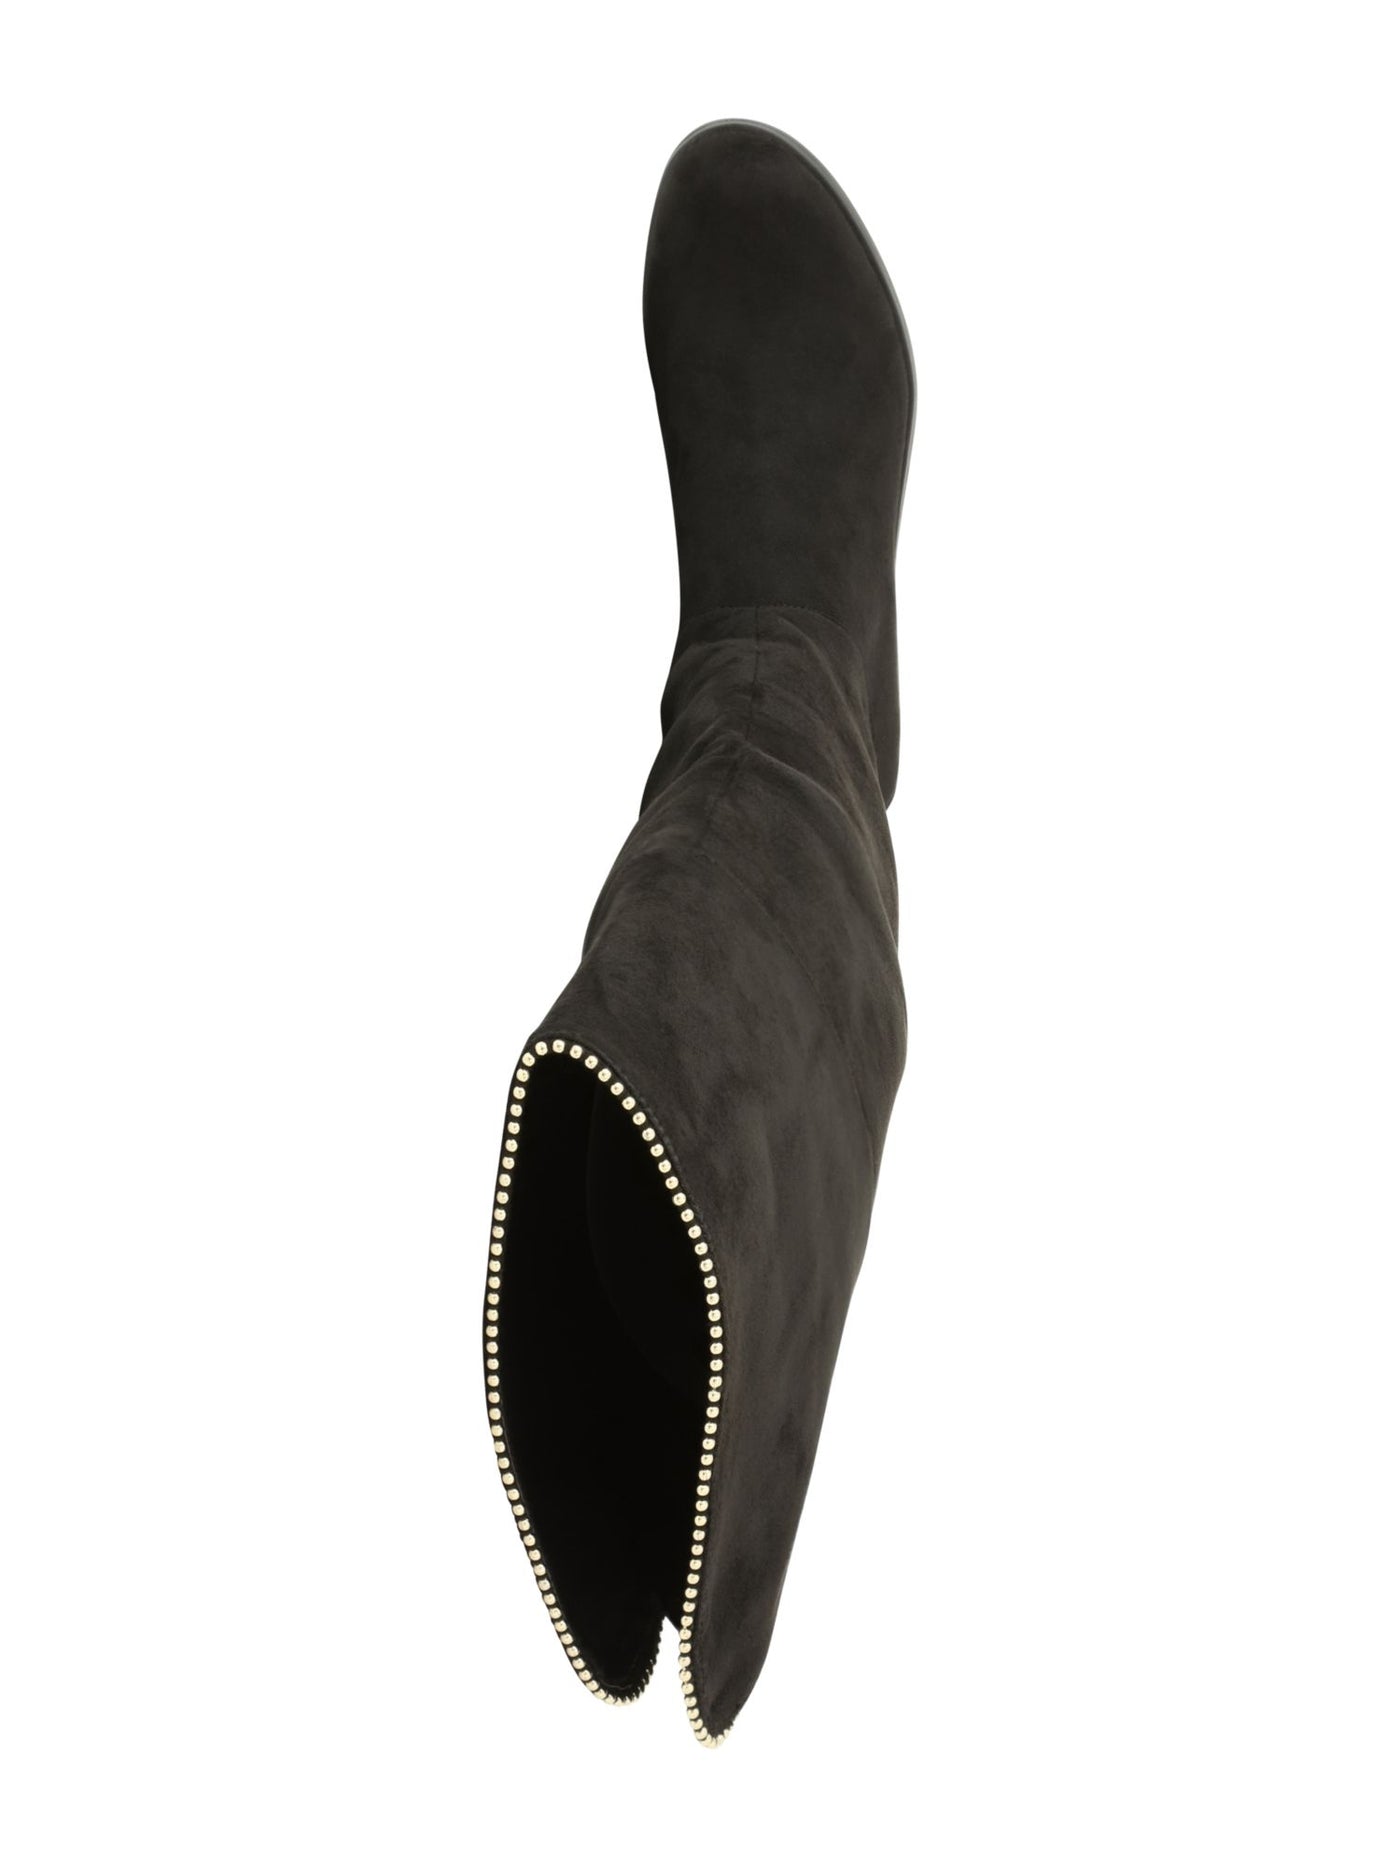 XOXO Womens Black Bead Chain Studding Tristen Round Toe Block Heel Zip-Up Boots Shoes 9.5 M